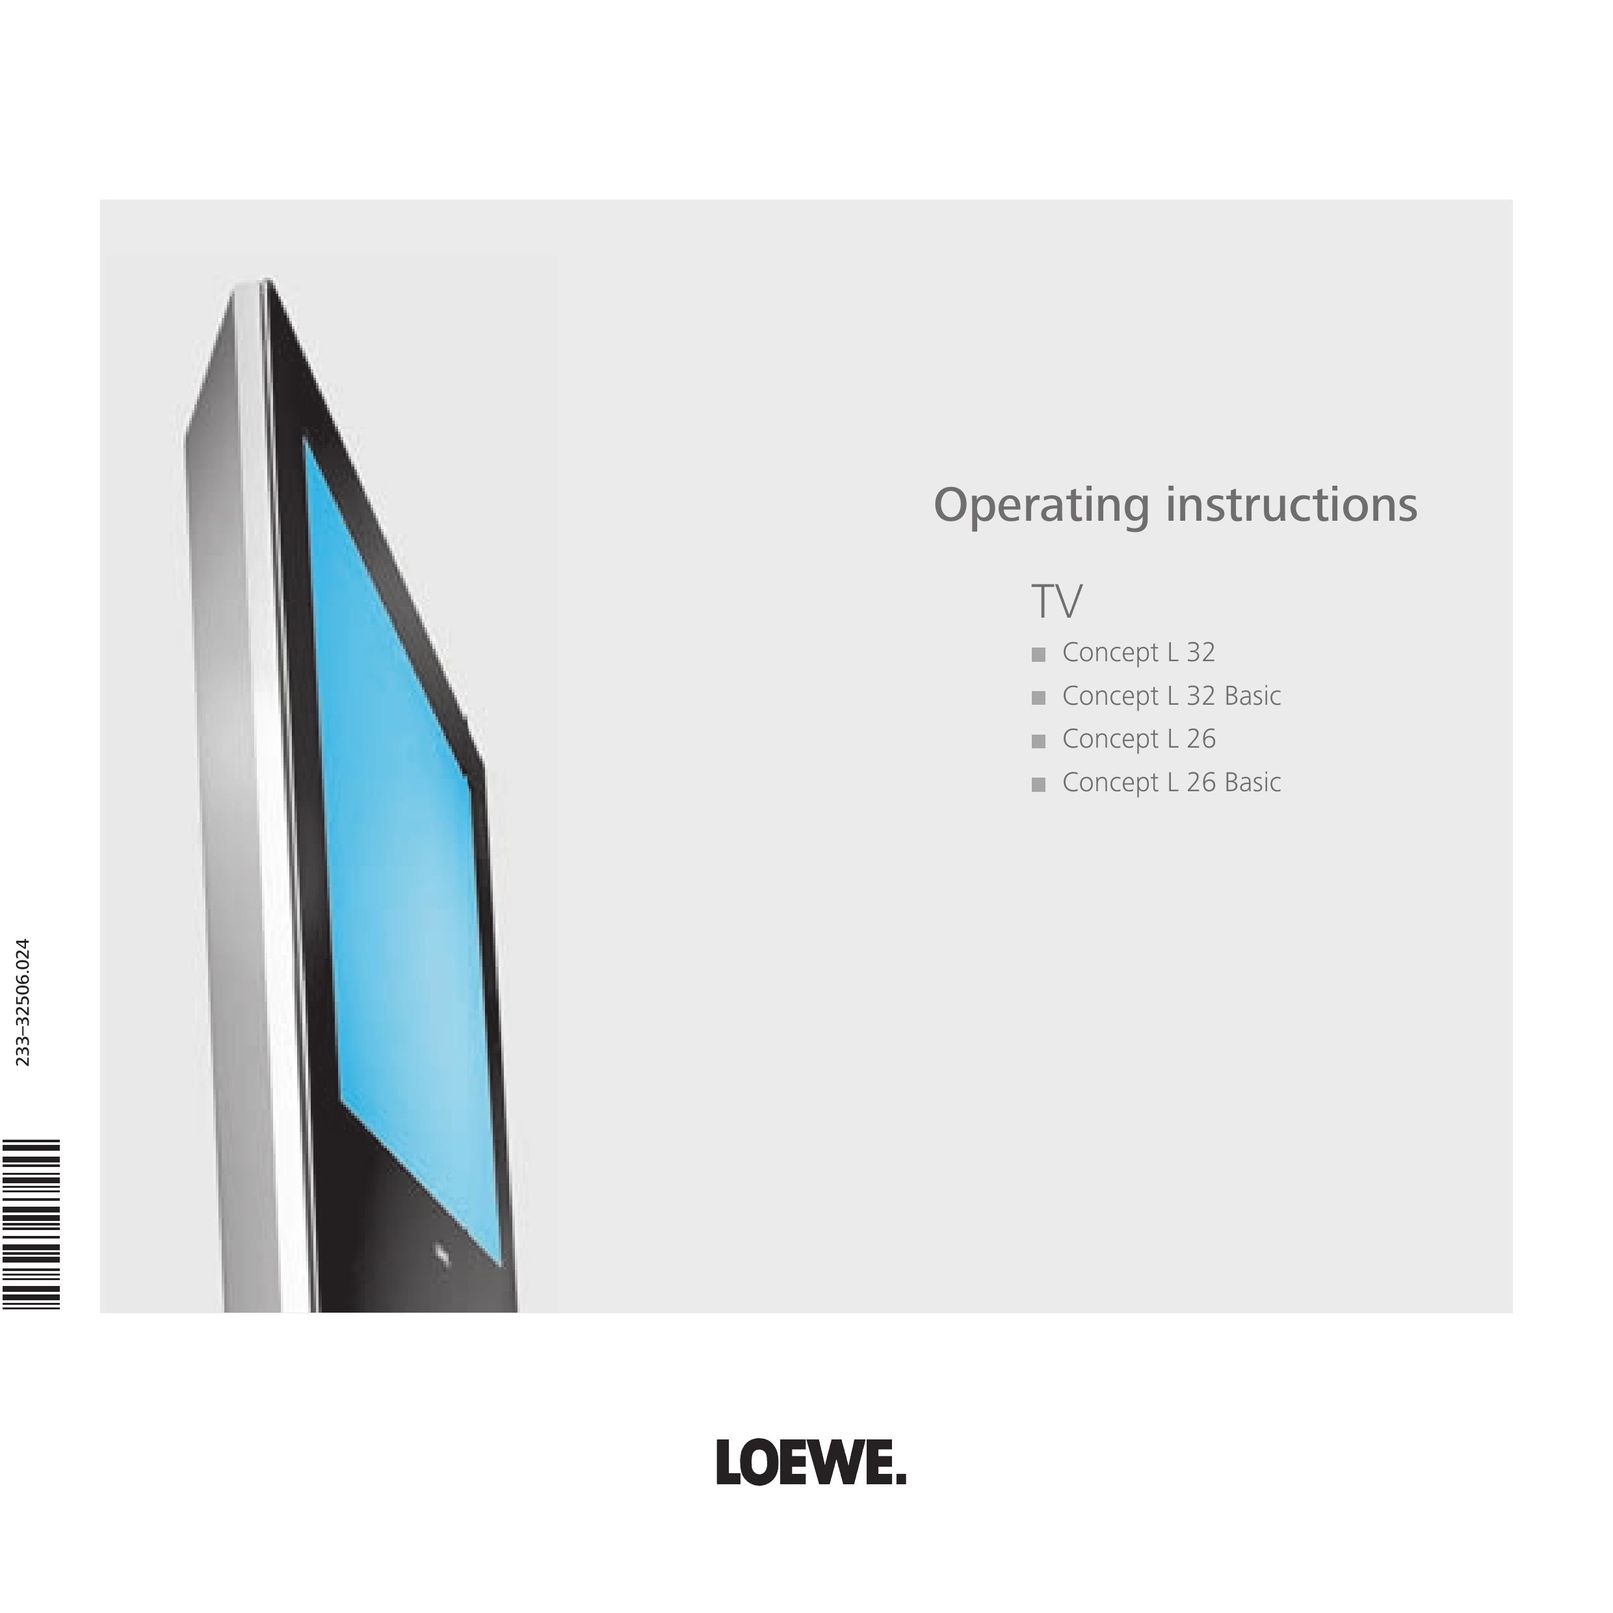 Loewe ConceptL32Basic Flat Panel Television User Manual